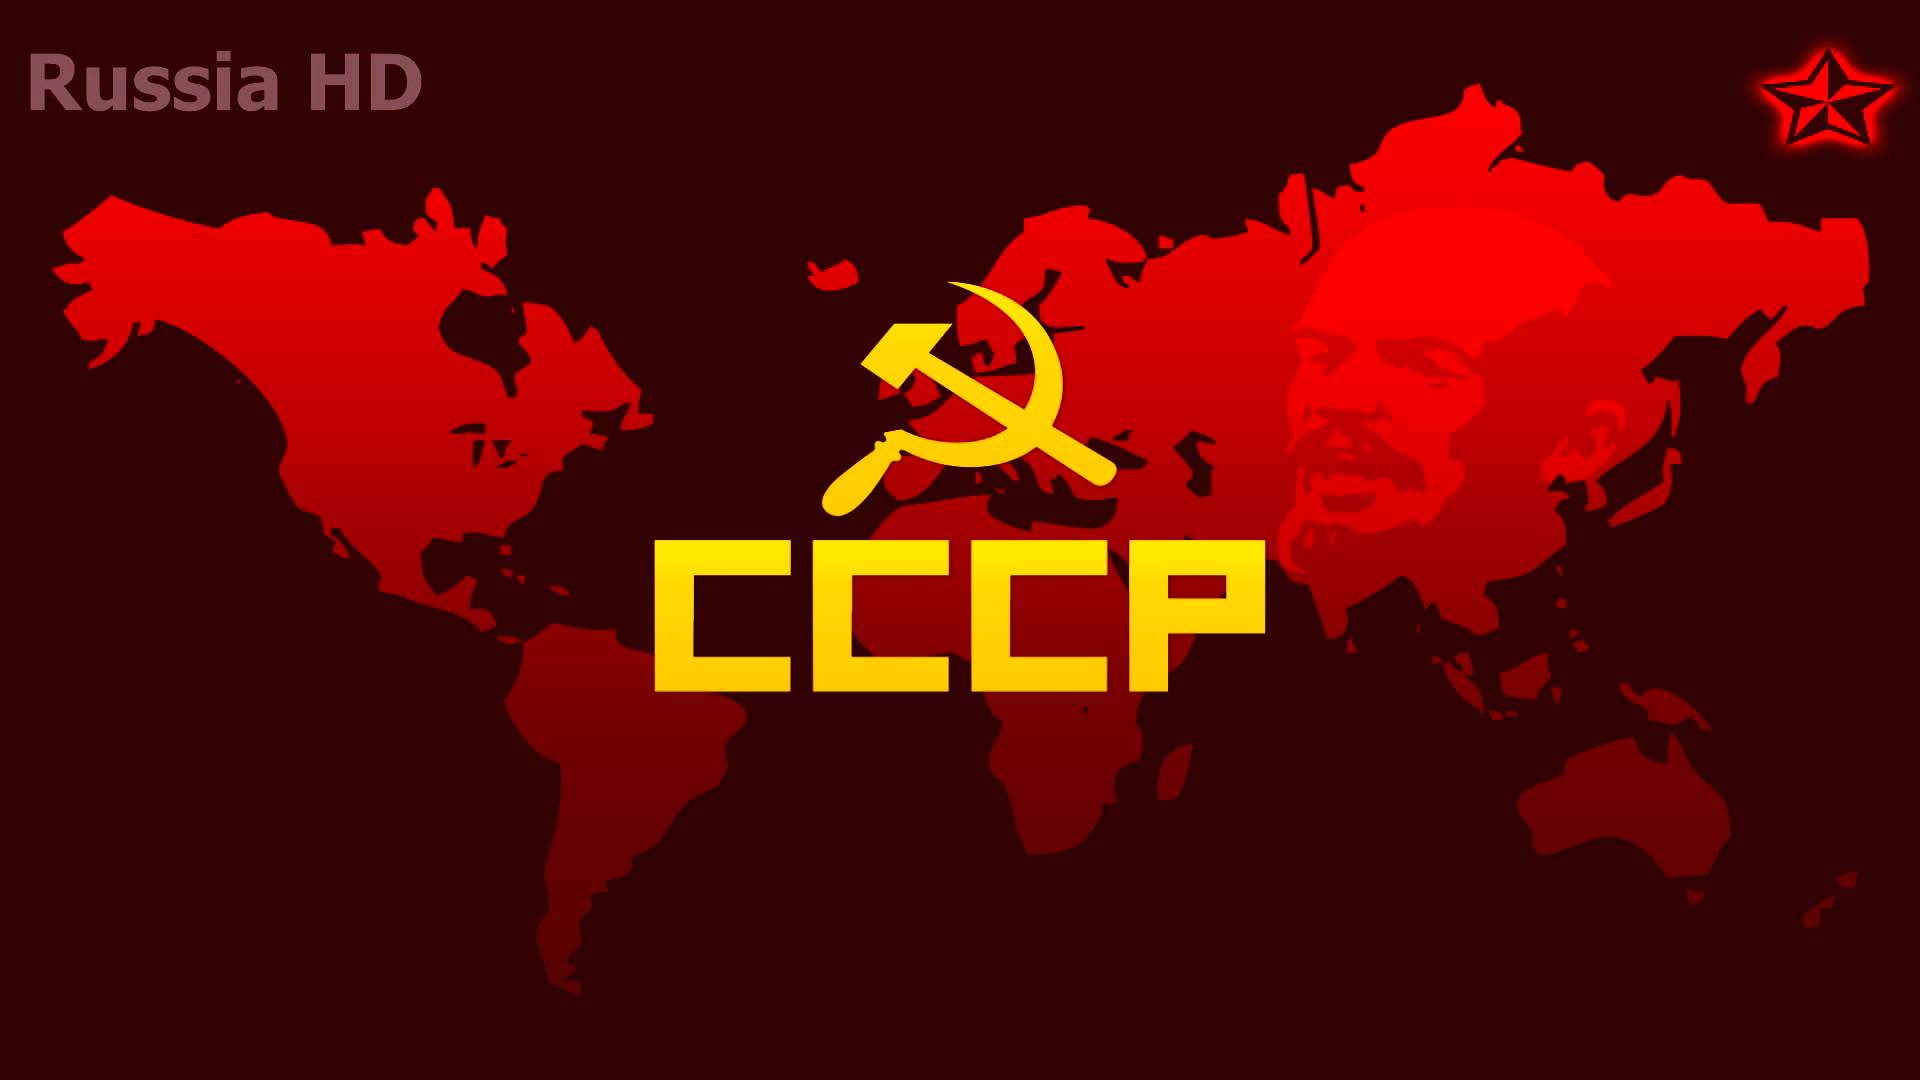 HD RUSSIA USSR MAP